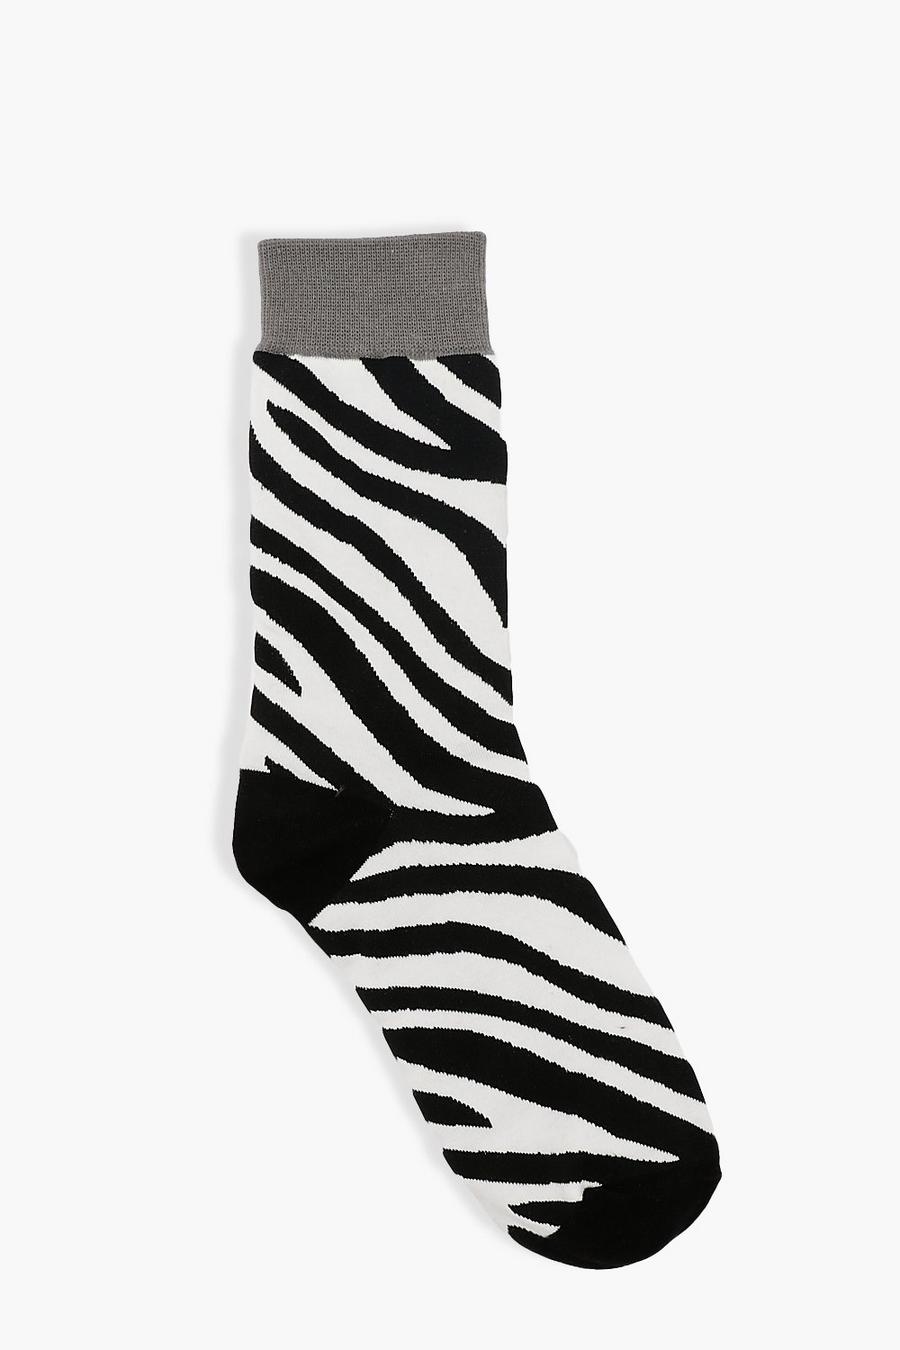 Zebra גרביים בדוגמת זברה